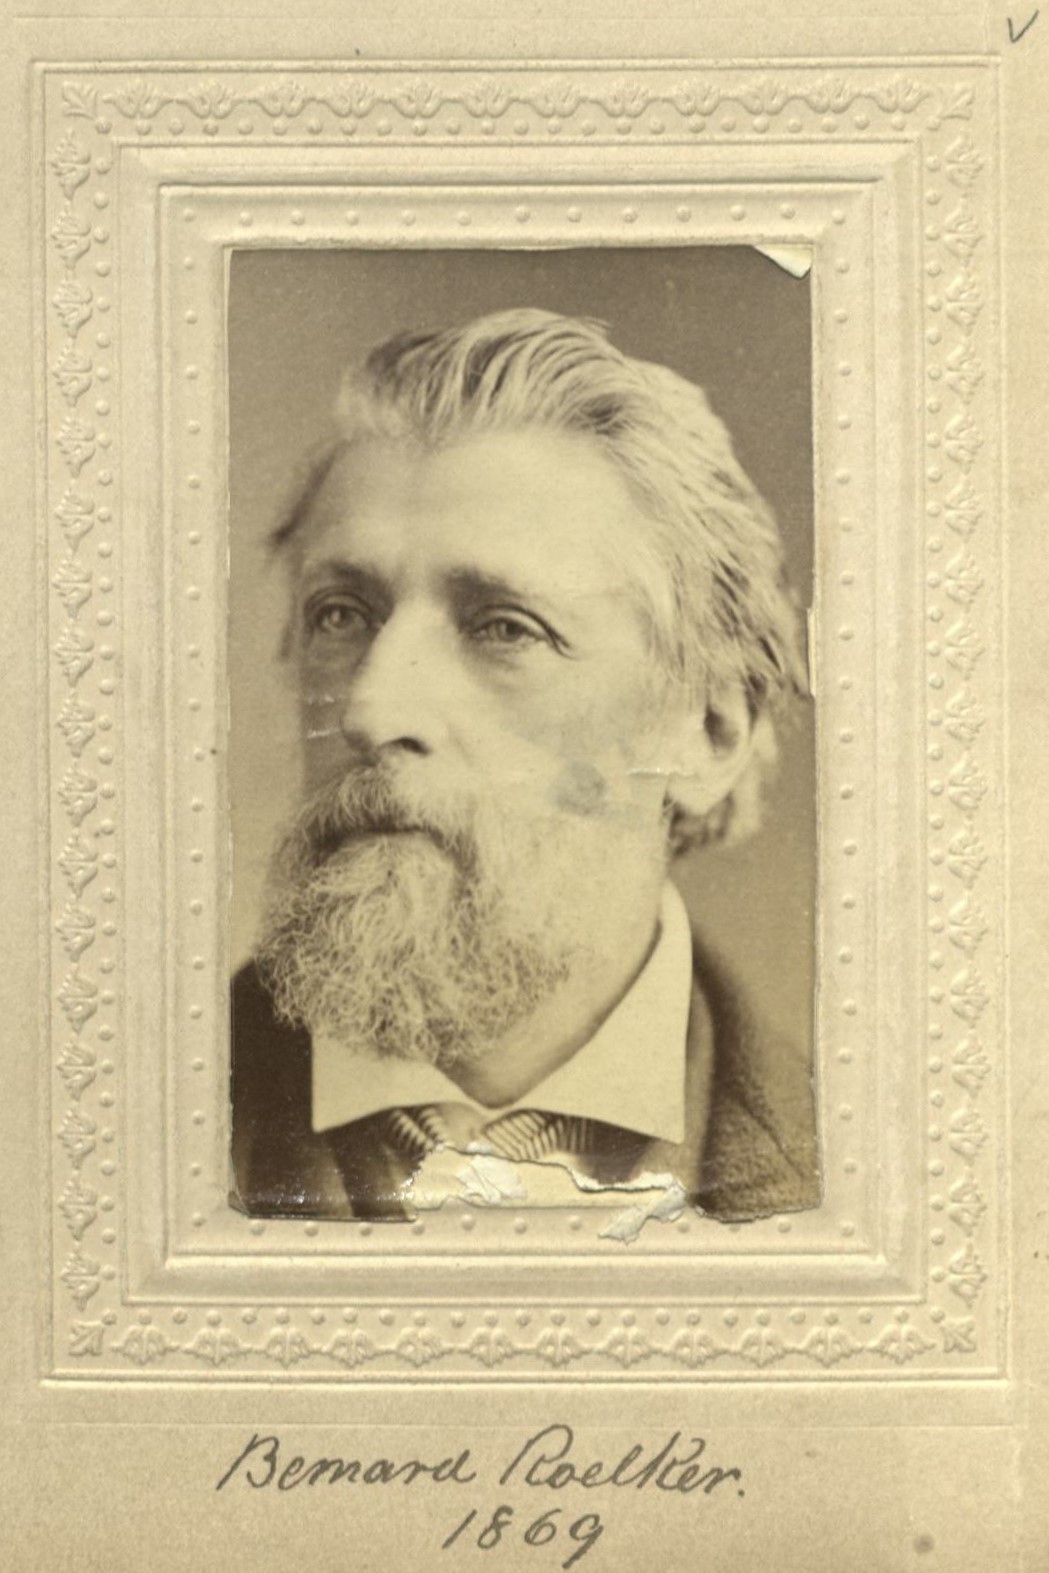 Member portrait of Bernard Roelker